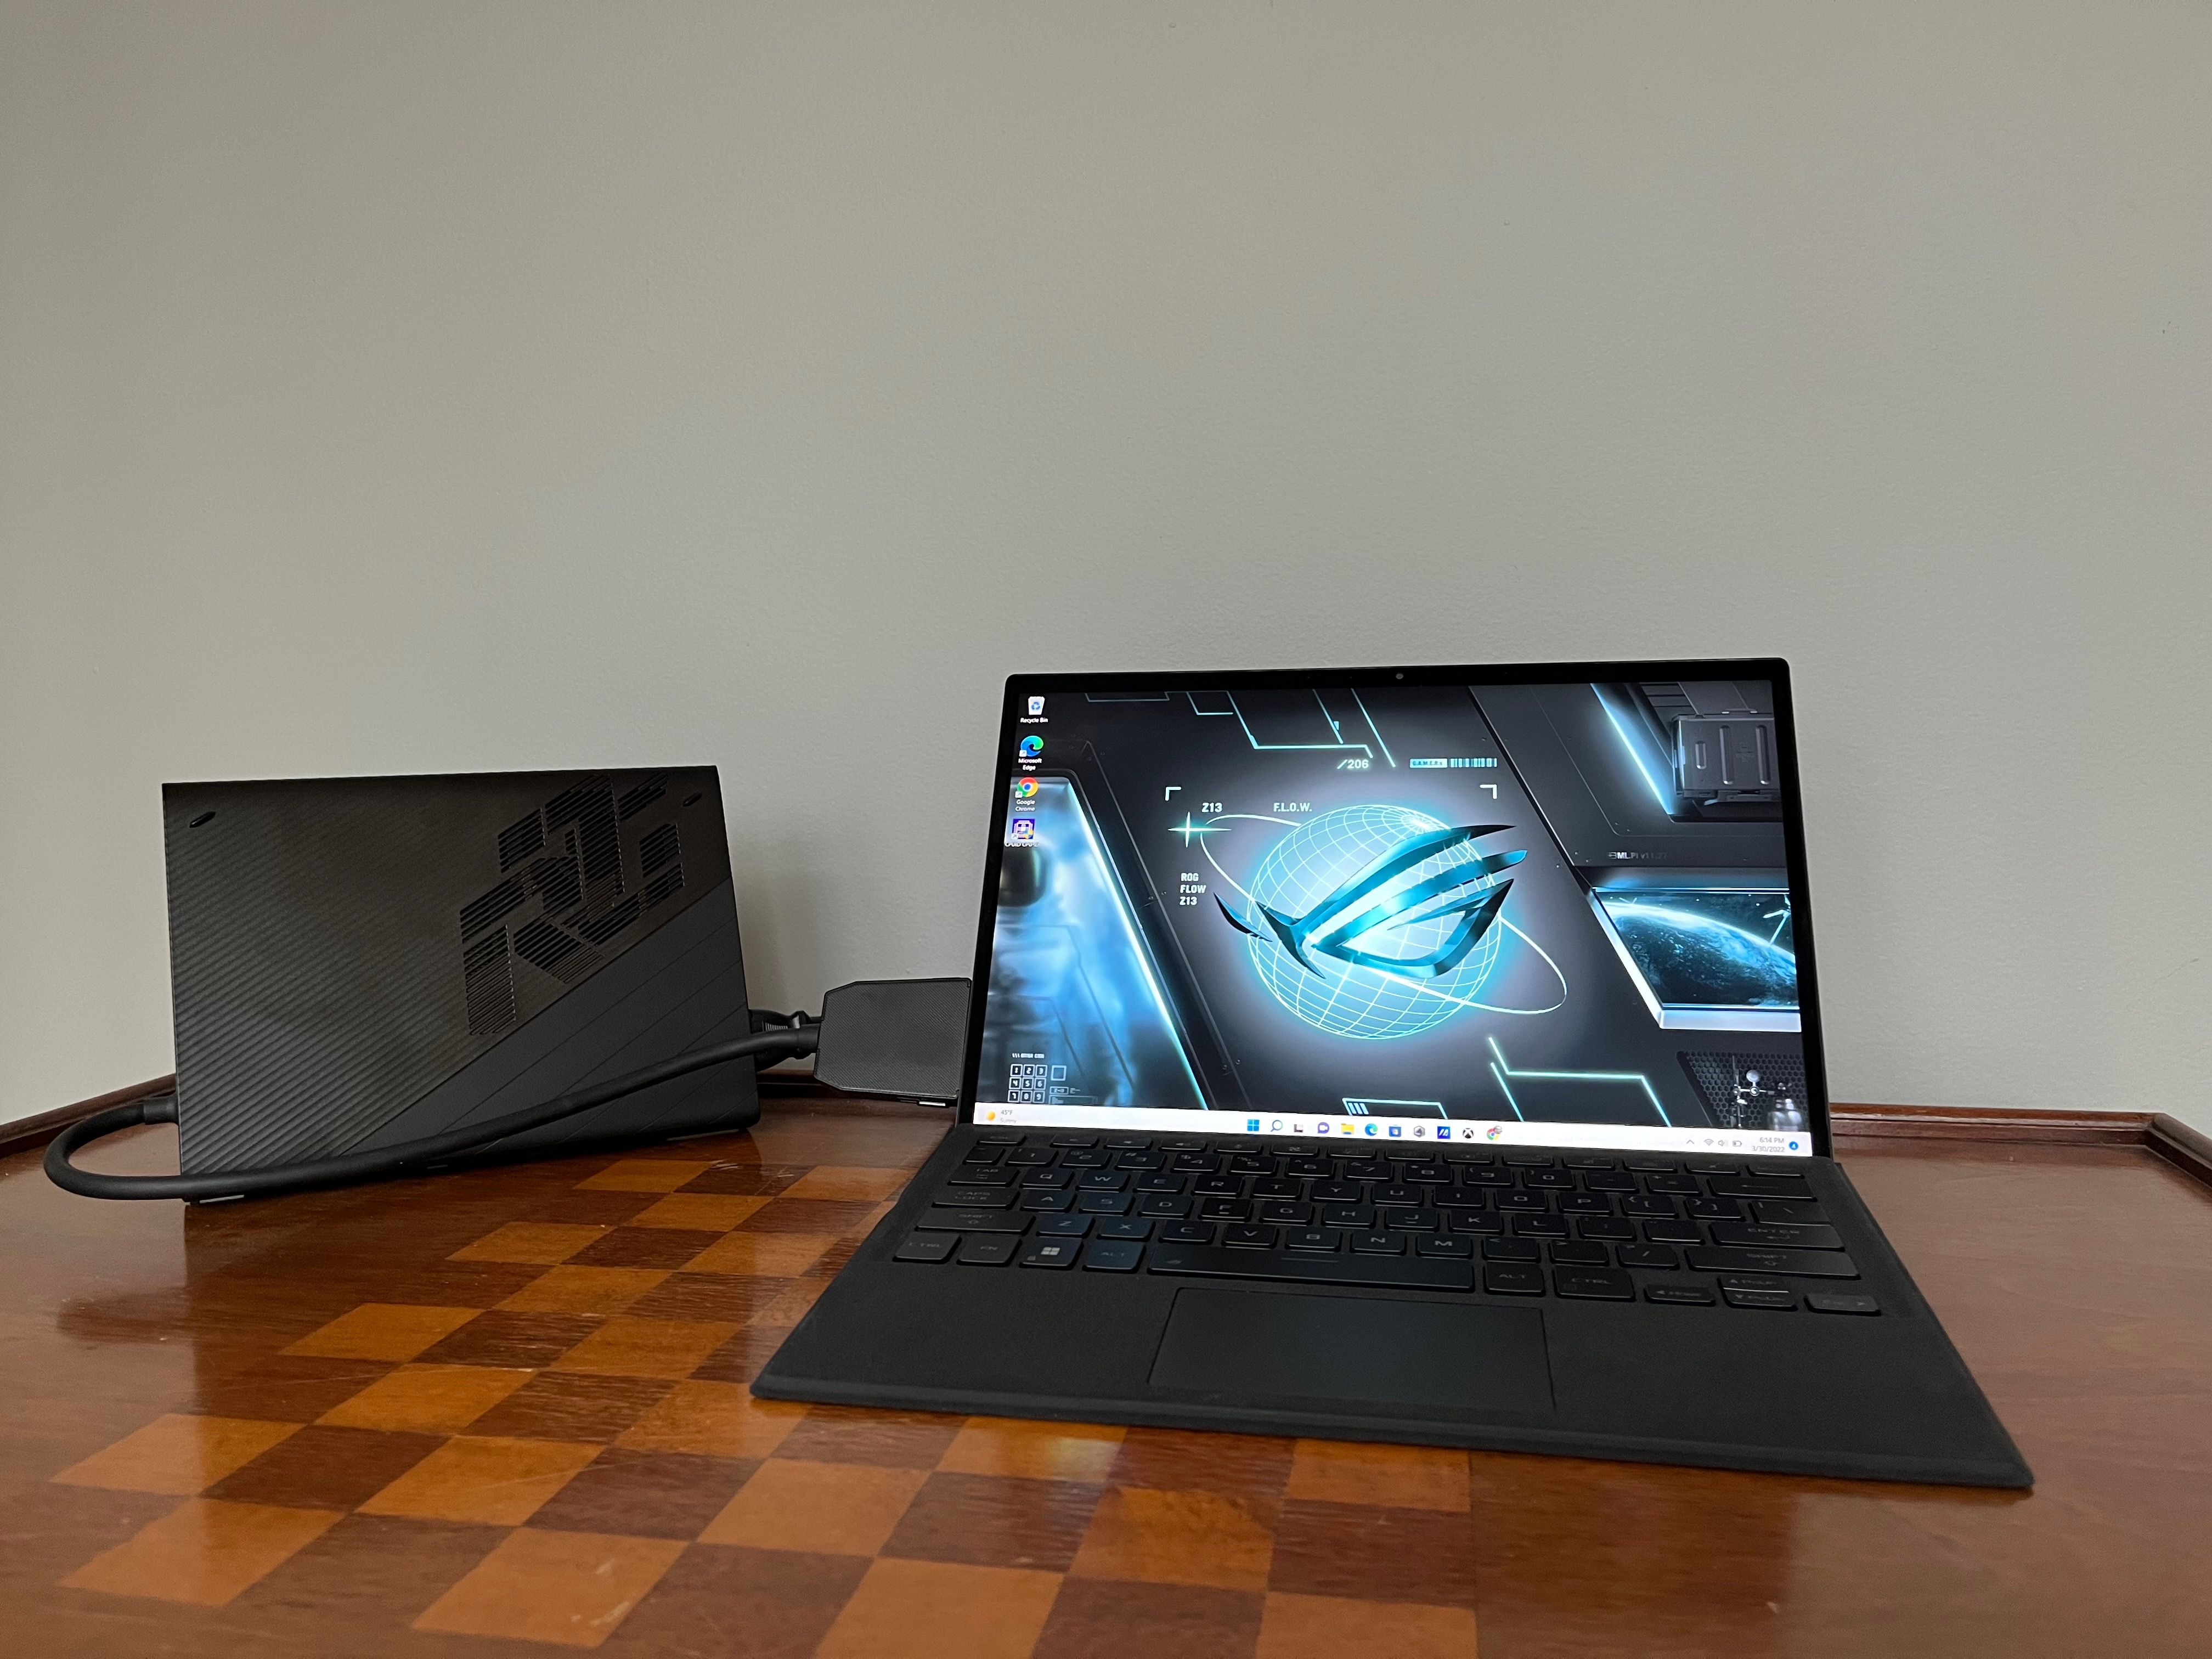 Asus ROG Flow Z13 - Melhor laptop estilo folio